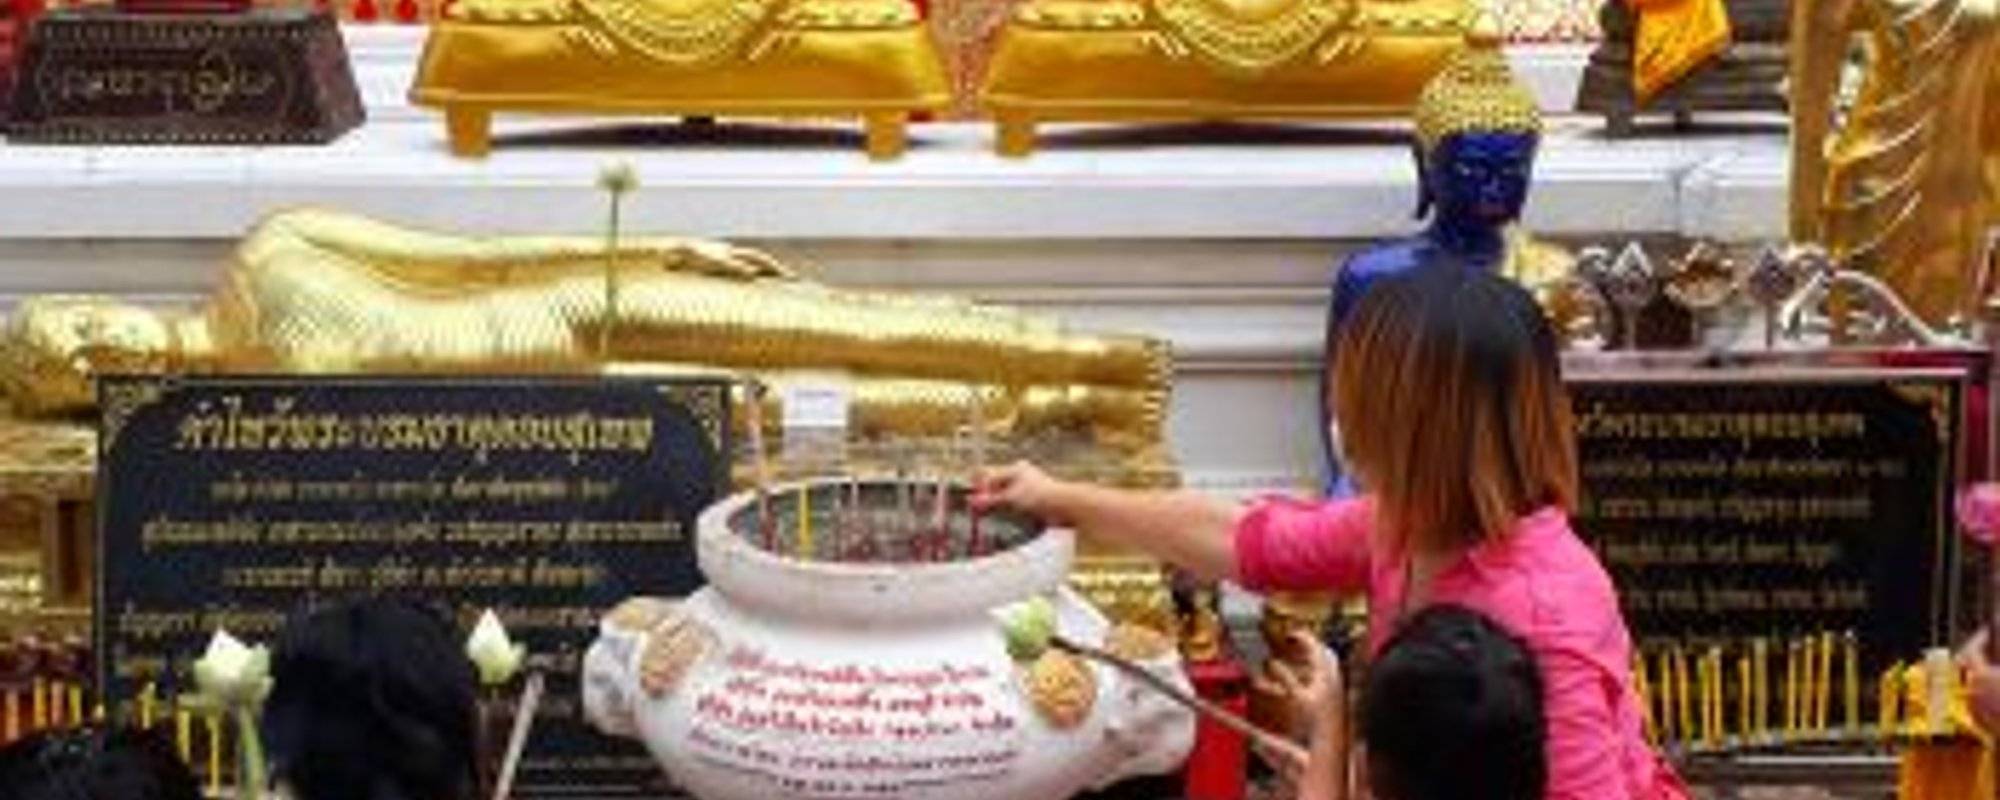 Travel Pro Places of Interest #224: Wat Doi Suthep, Chiang Mai Thailand! Part Two (9 photos)